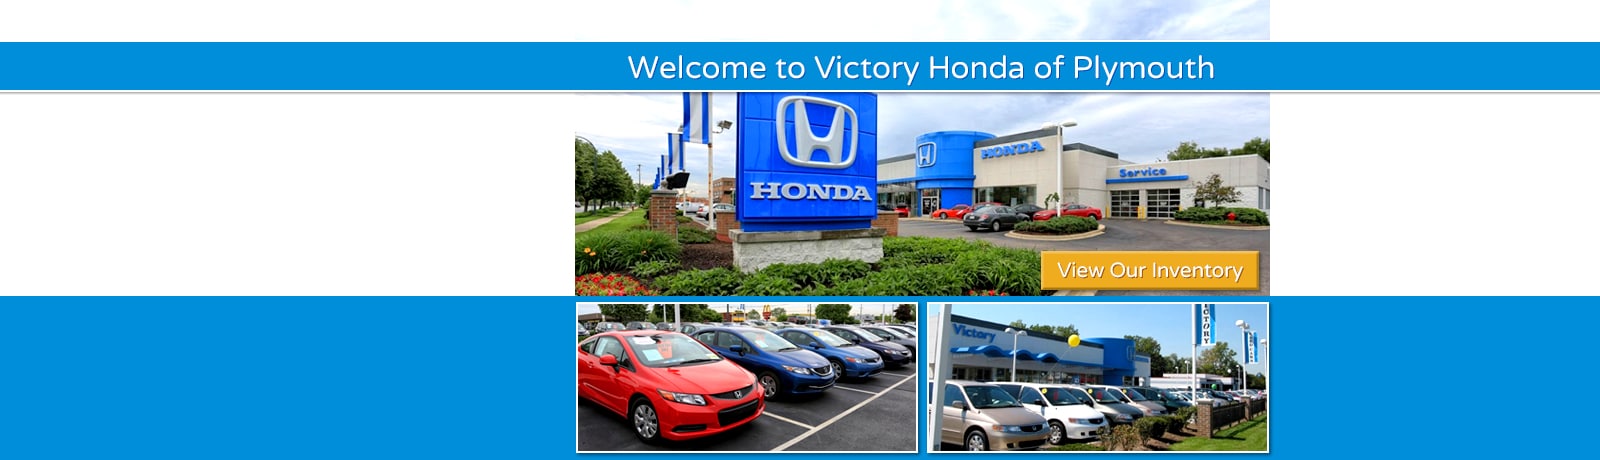 Honda dealers near brighton mi #5